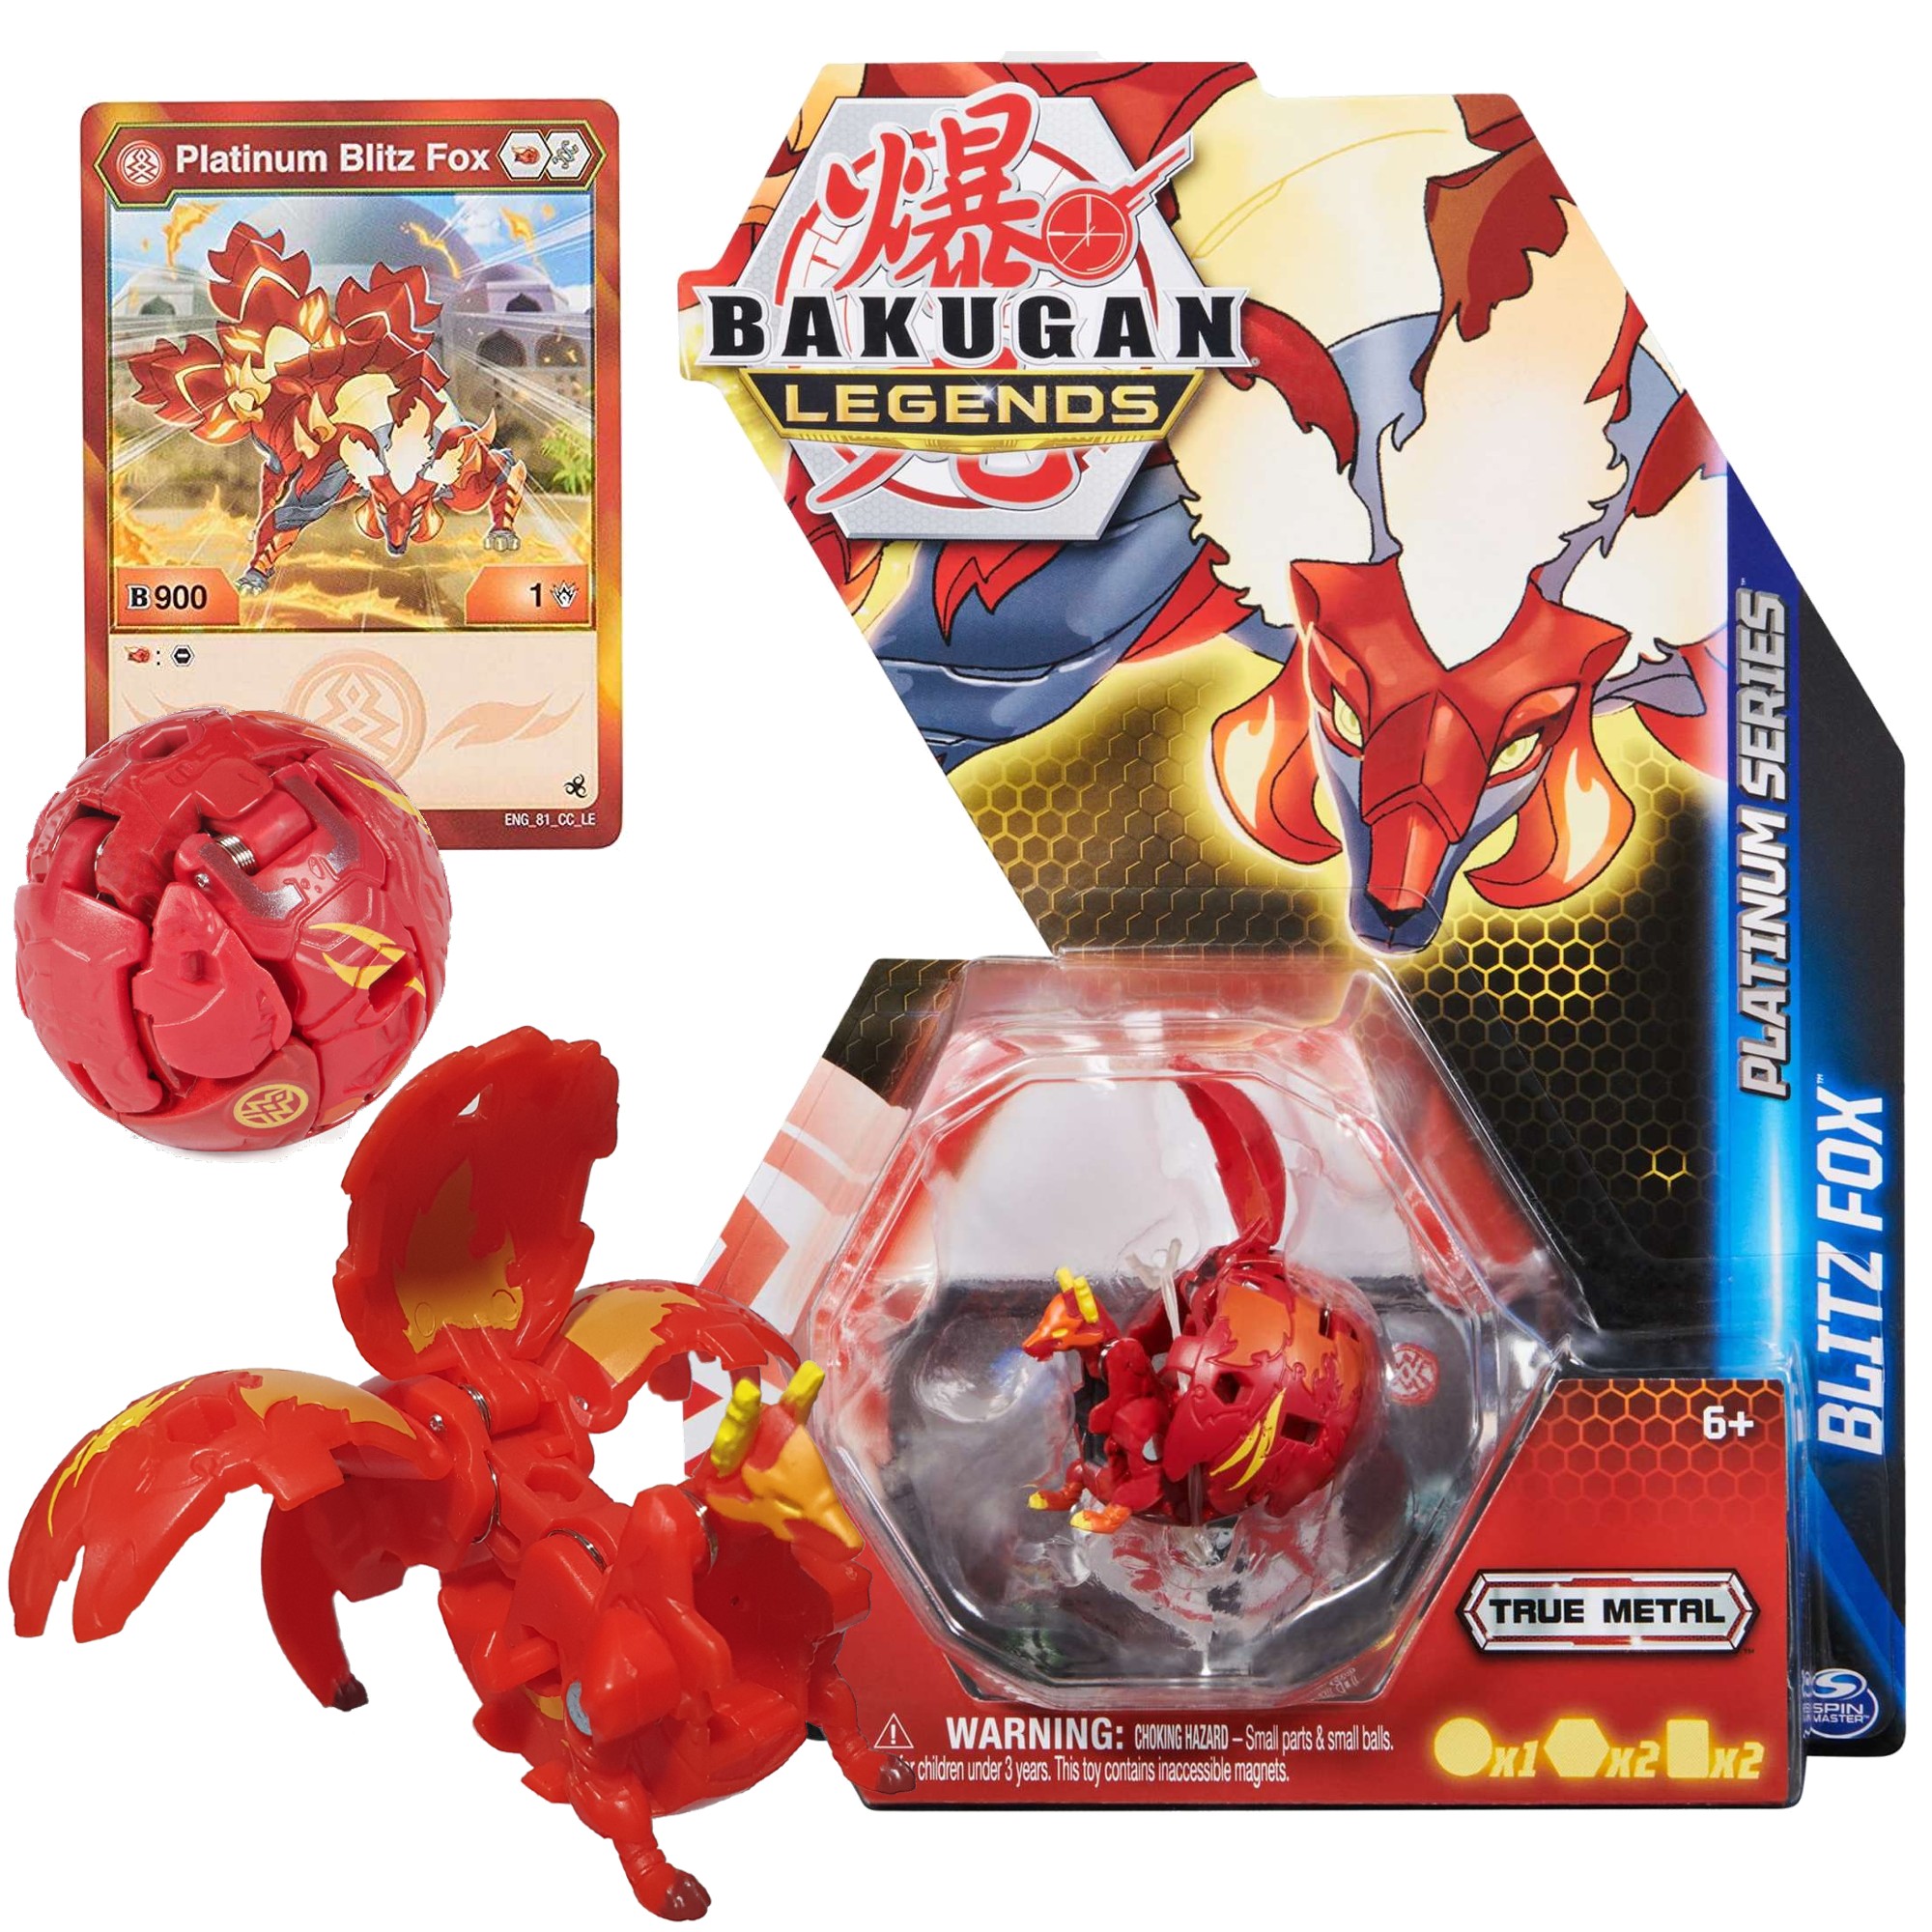 Bakugan Legends Platinum czerwona figurka Kolekcjonerska Blitz Fox karty + arkusz kolekcjonerski 6+